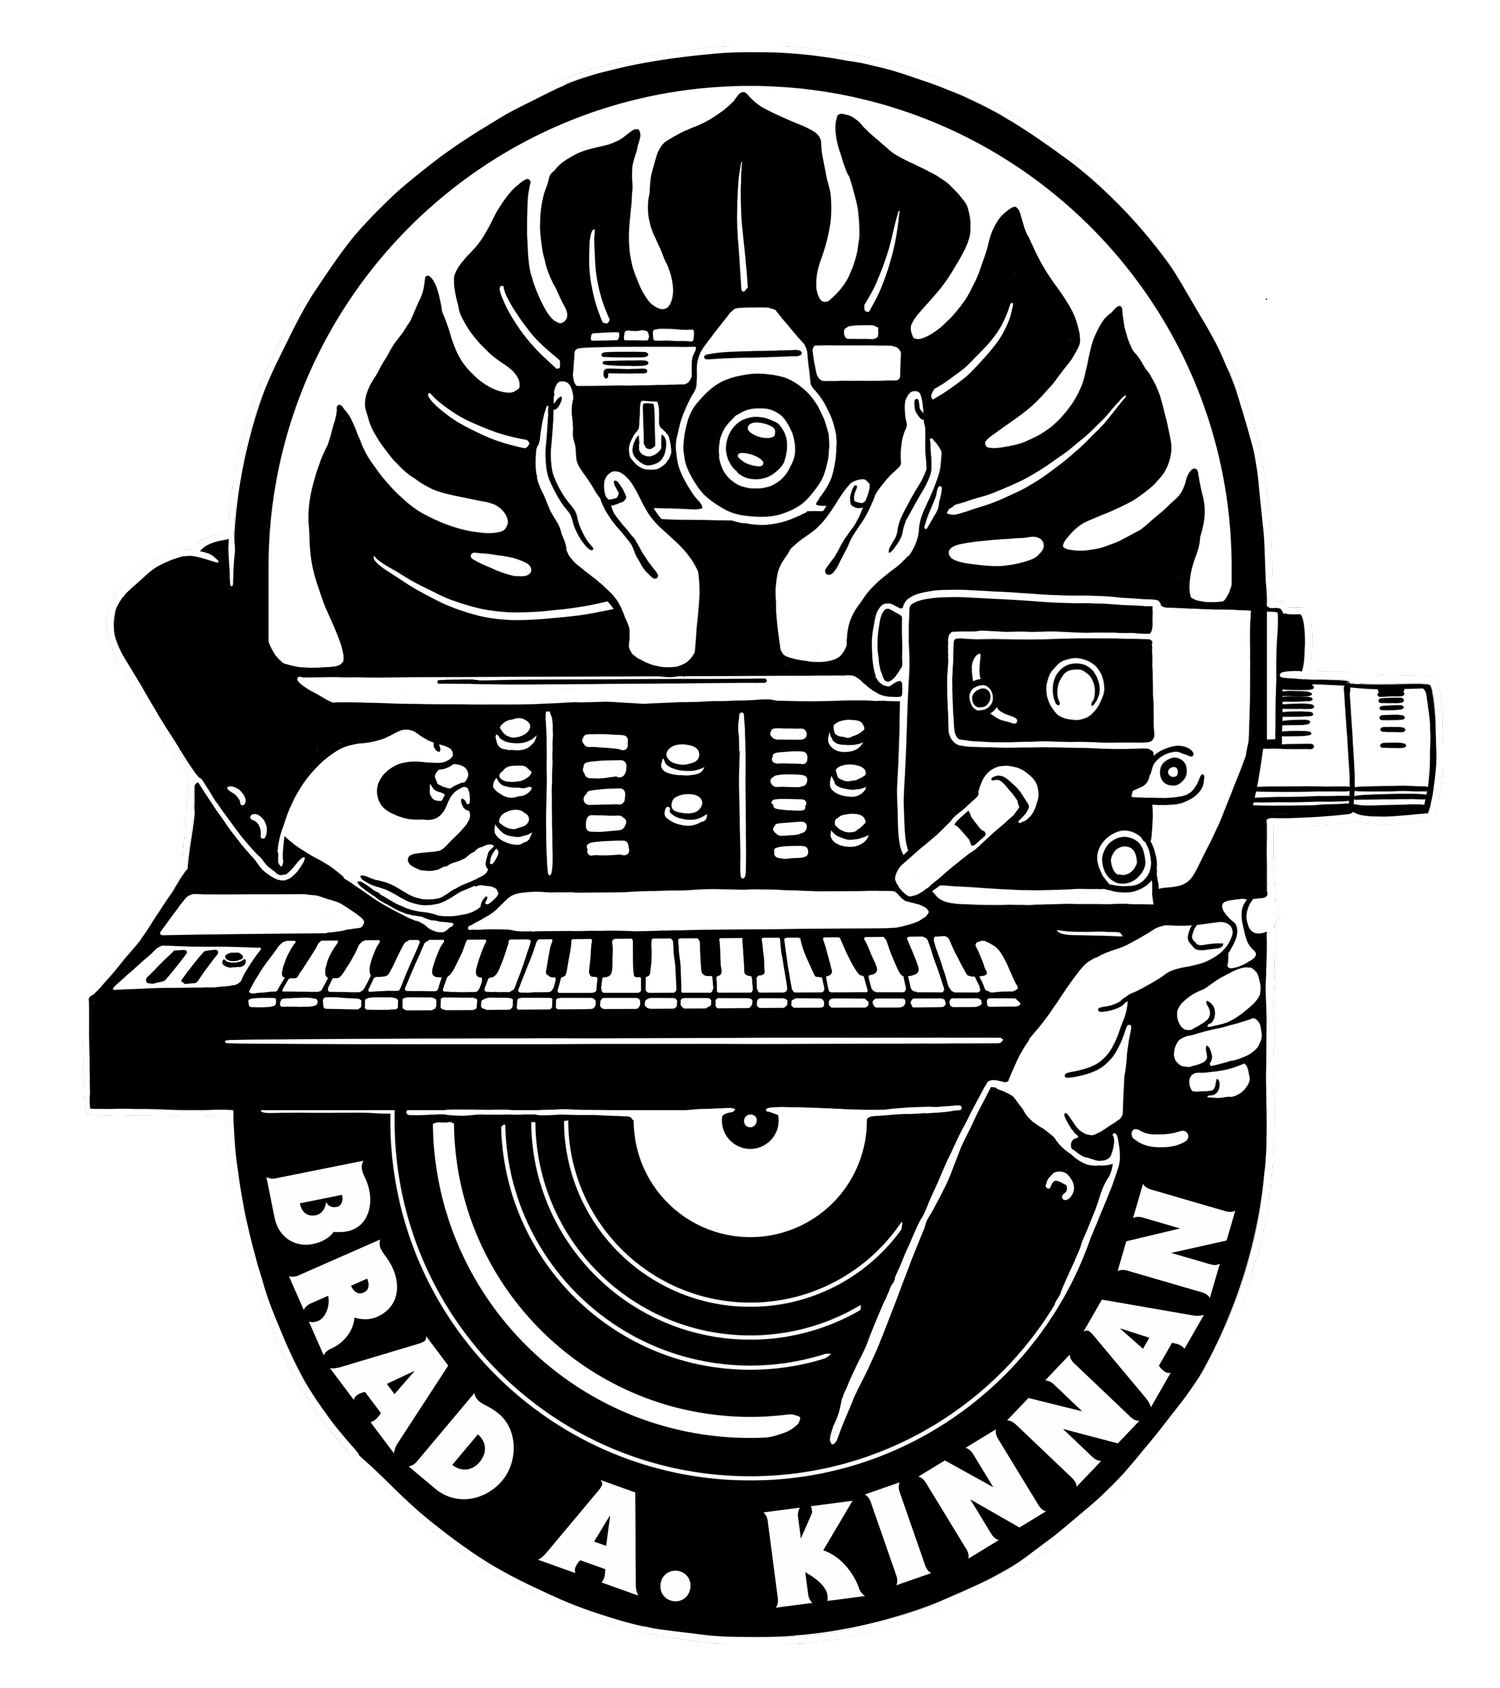 Brad A. Kinnan | Director, Photographer, &amp; Editor based in Los Angeles